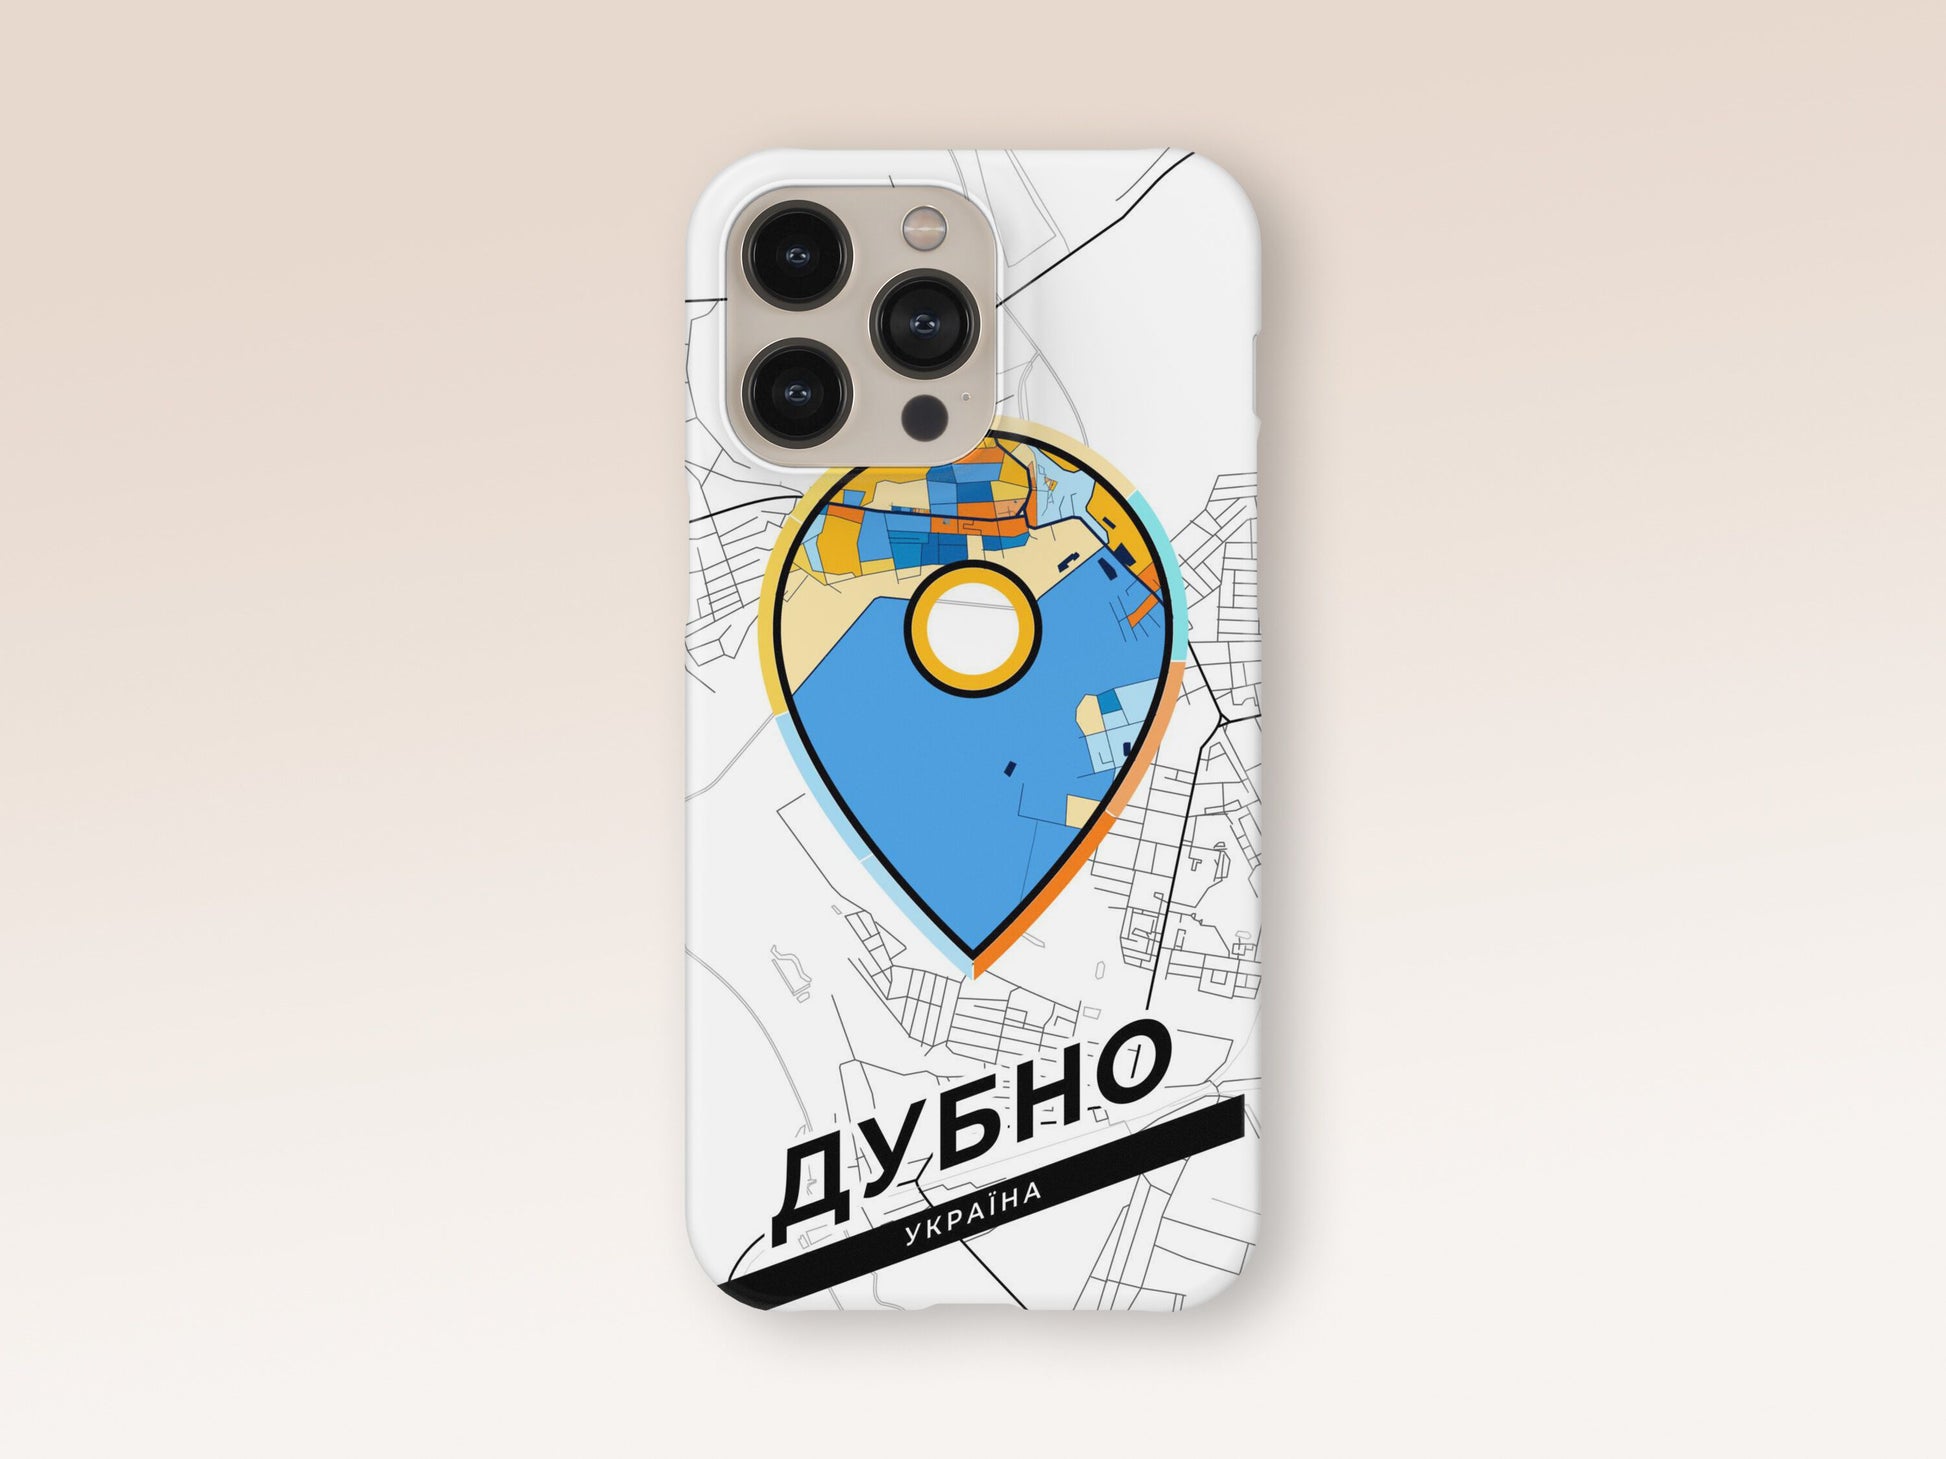 Dubno Ukraine slim phone case with colorful icon. Birthday, wedding or housewarming gift. Couple match cases. 1